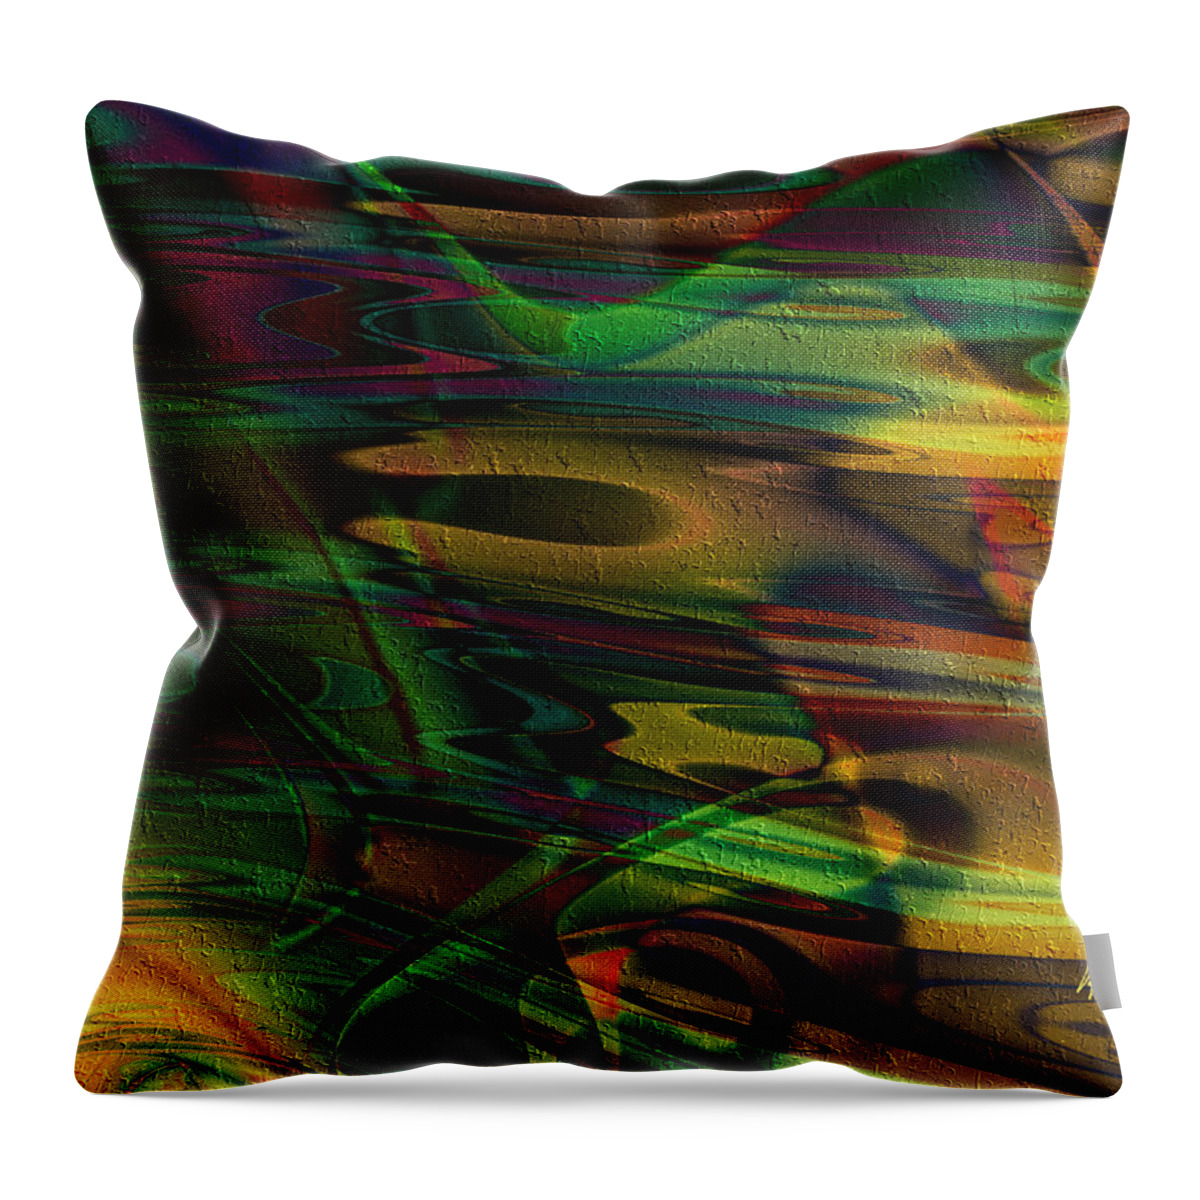 Breezy Throw Pillow featuring the digital art Breezy by Kiki Art